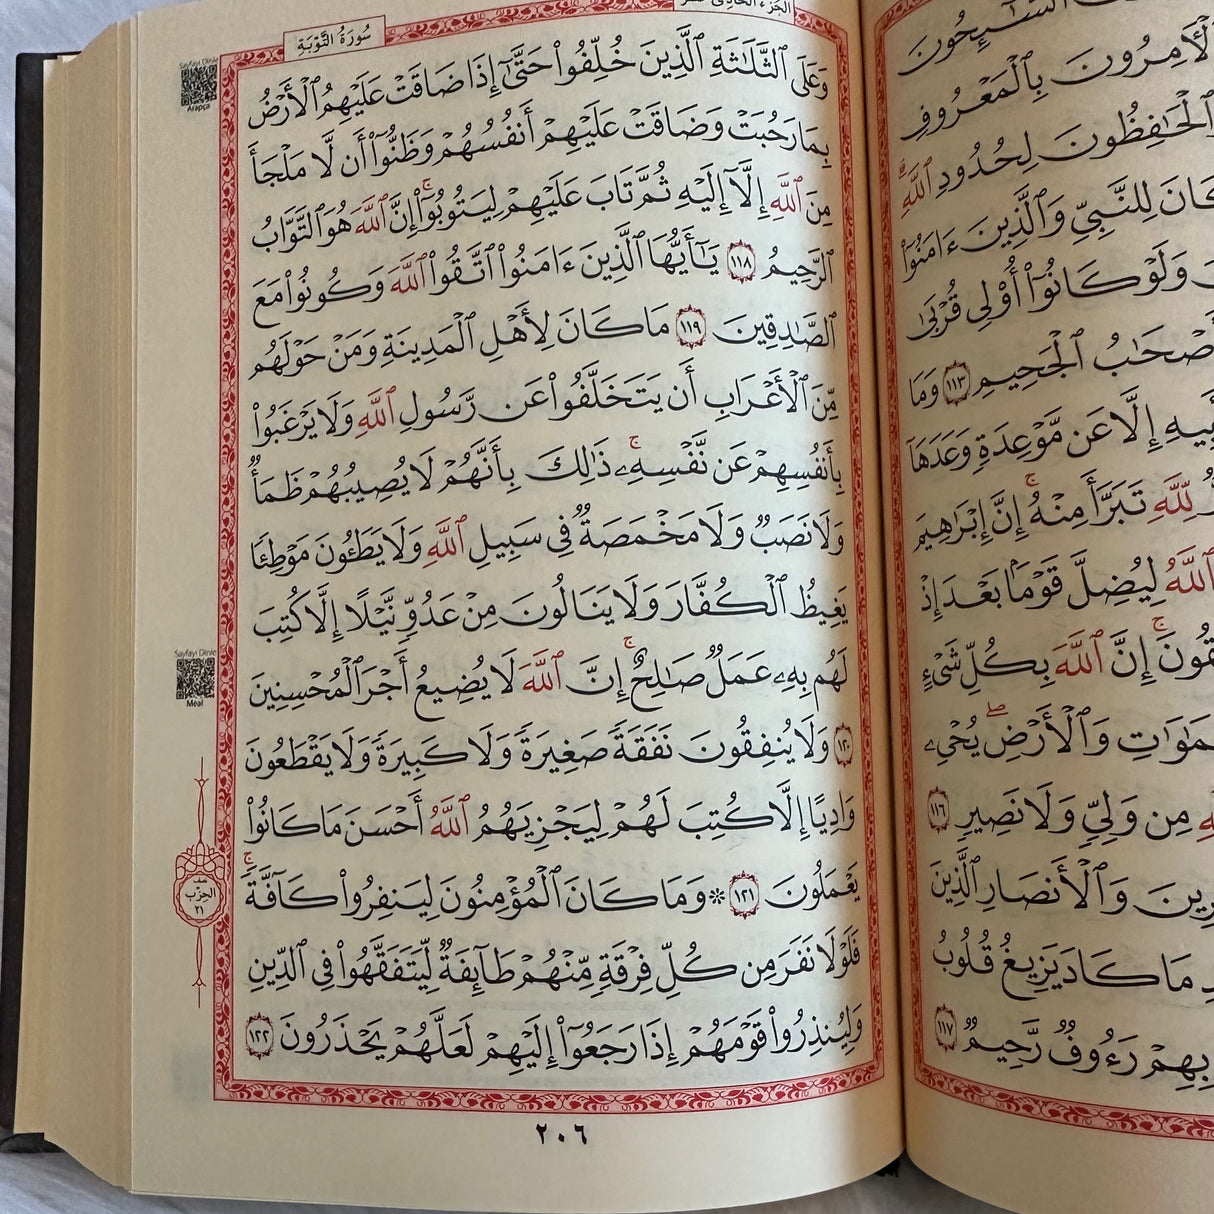 Arabic Quran - 14x20 cm